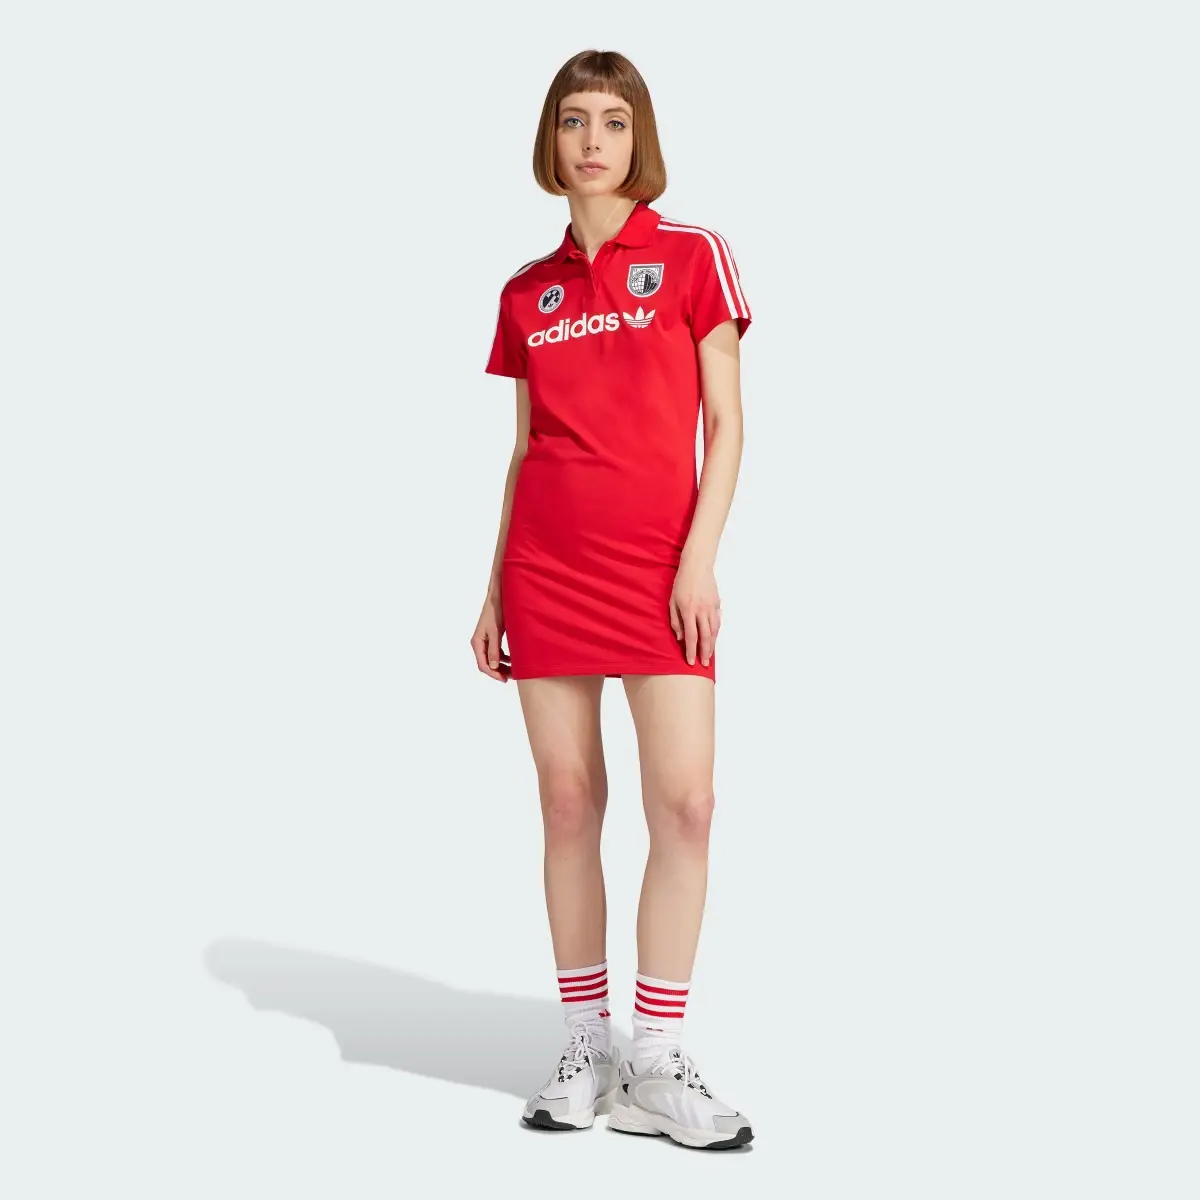 Adidas Football Dress. 2